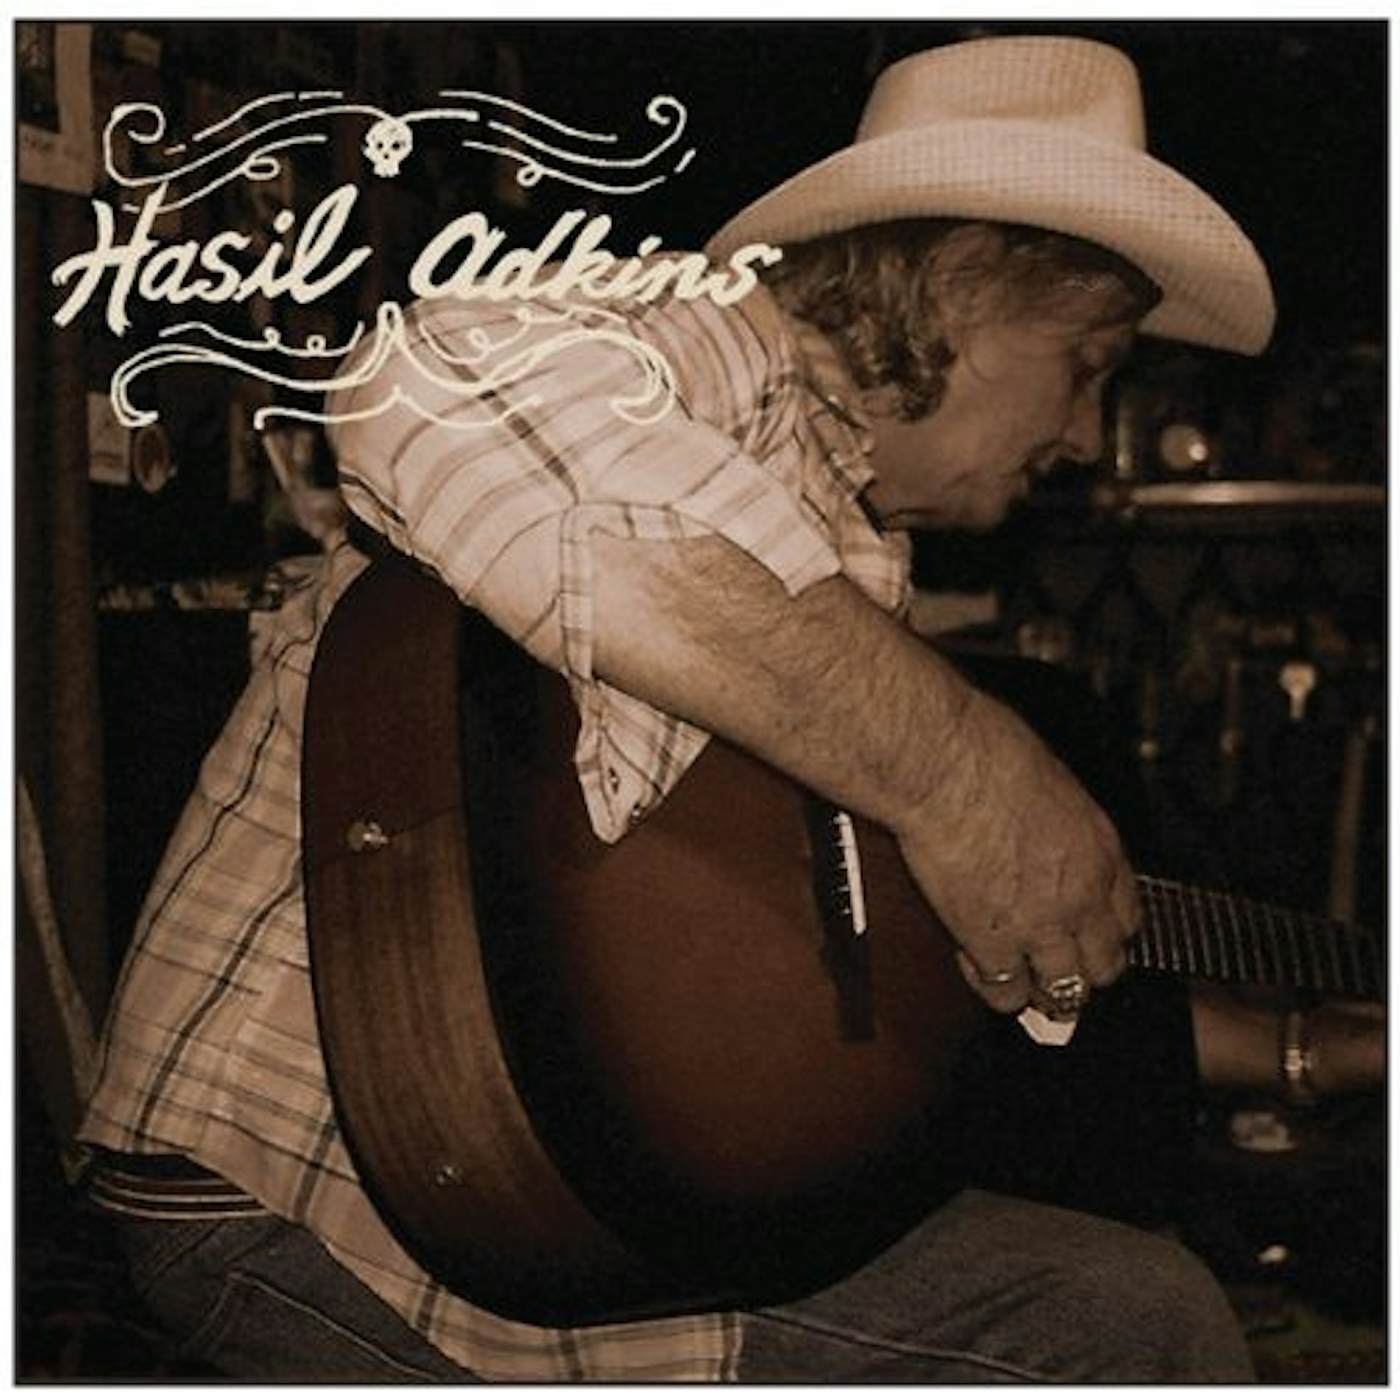 Hasil Adkins LAST RECORDINGS Vinyl Record